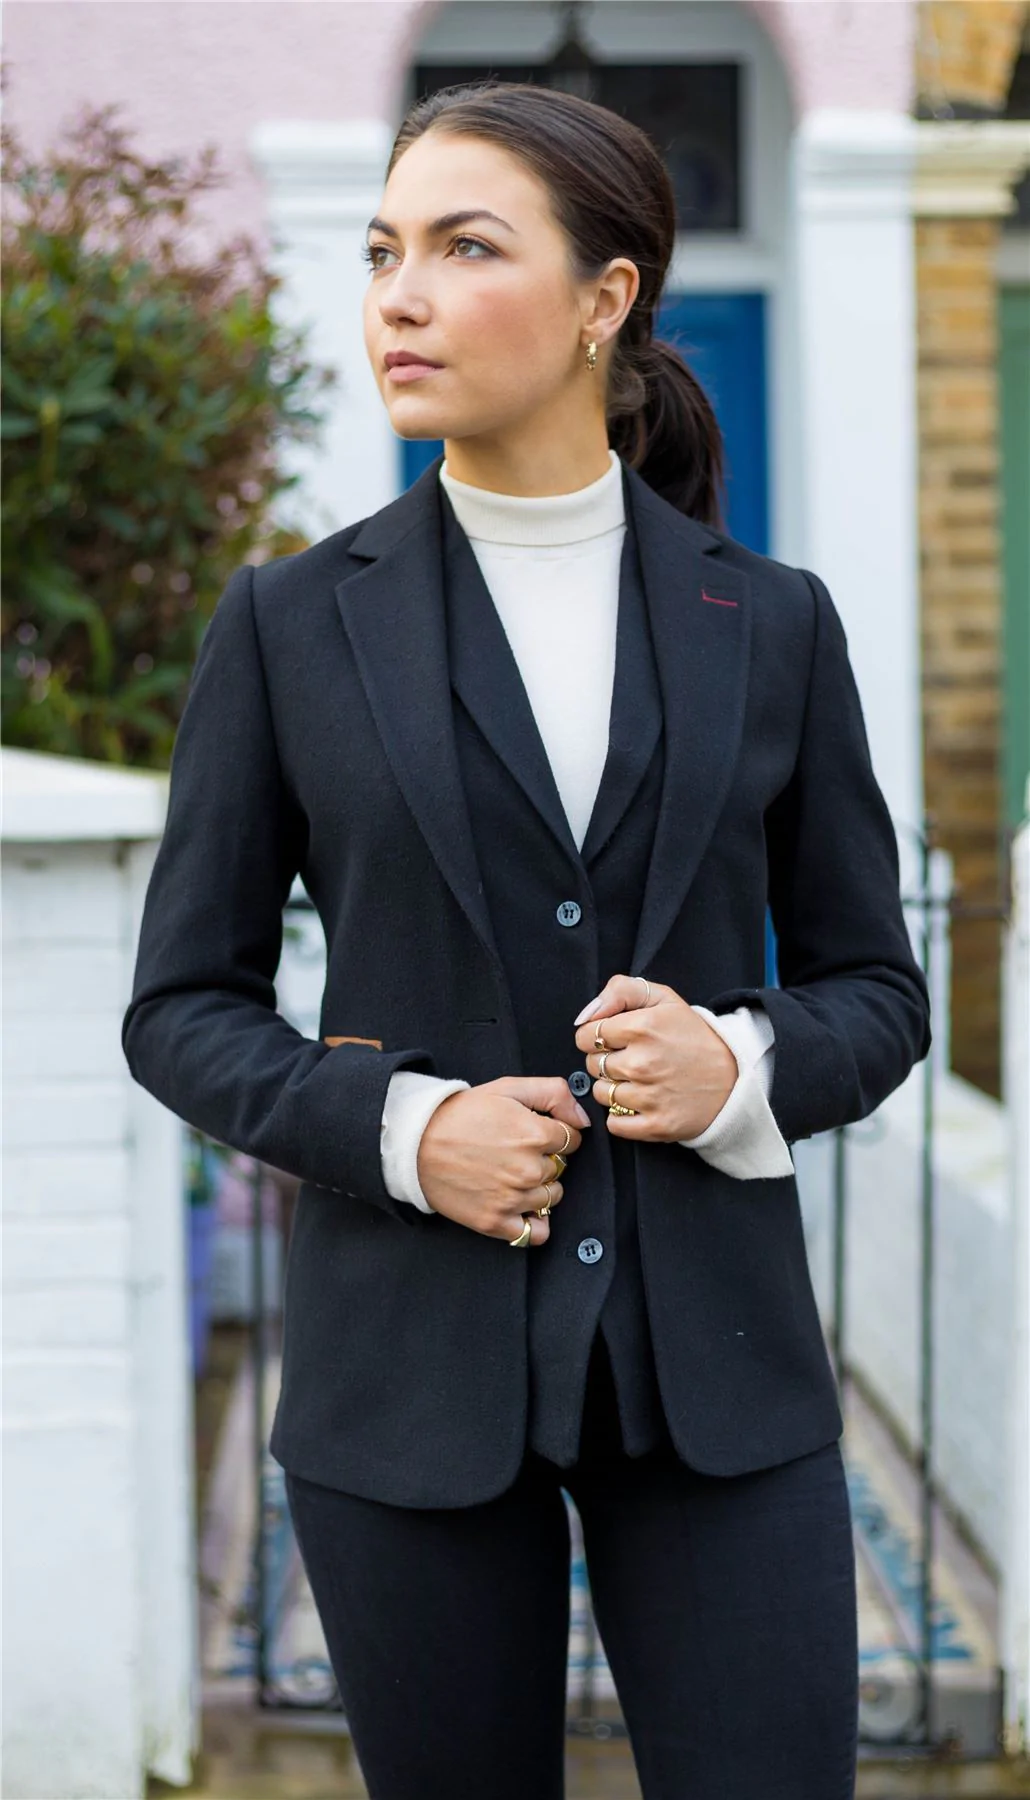 Women's Suits - Professional Women's Business Attire | Jones New York